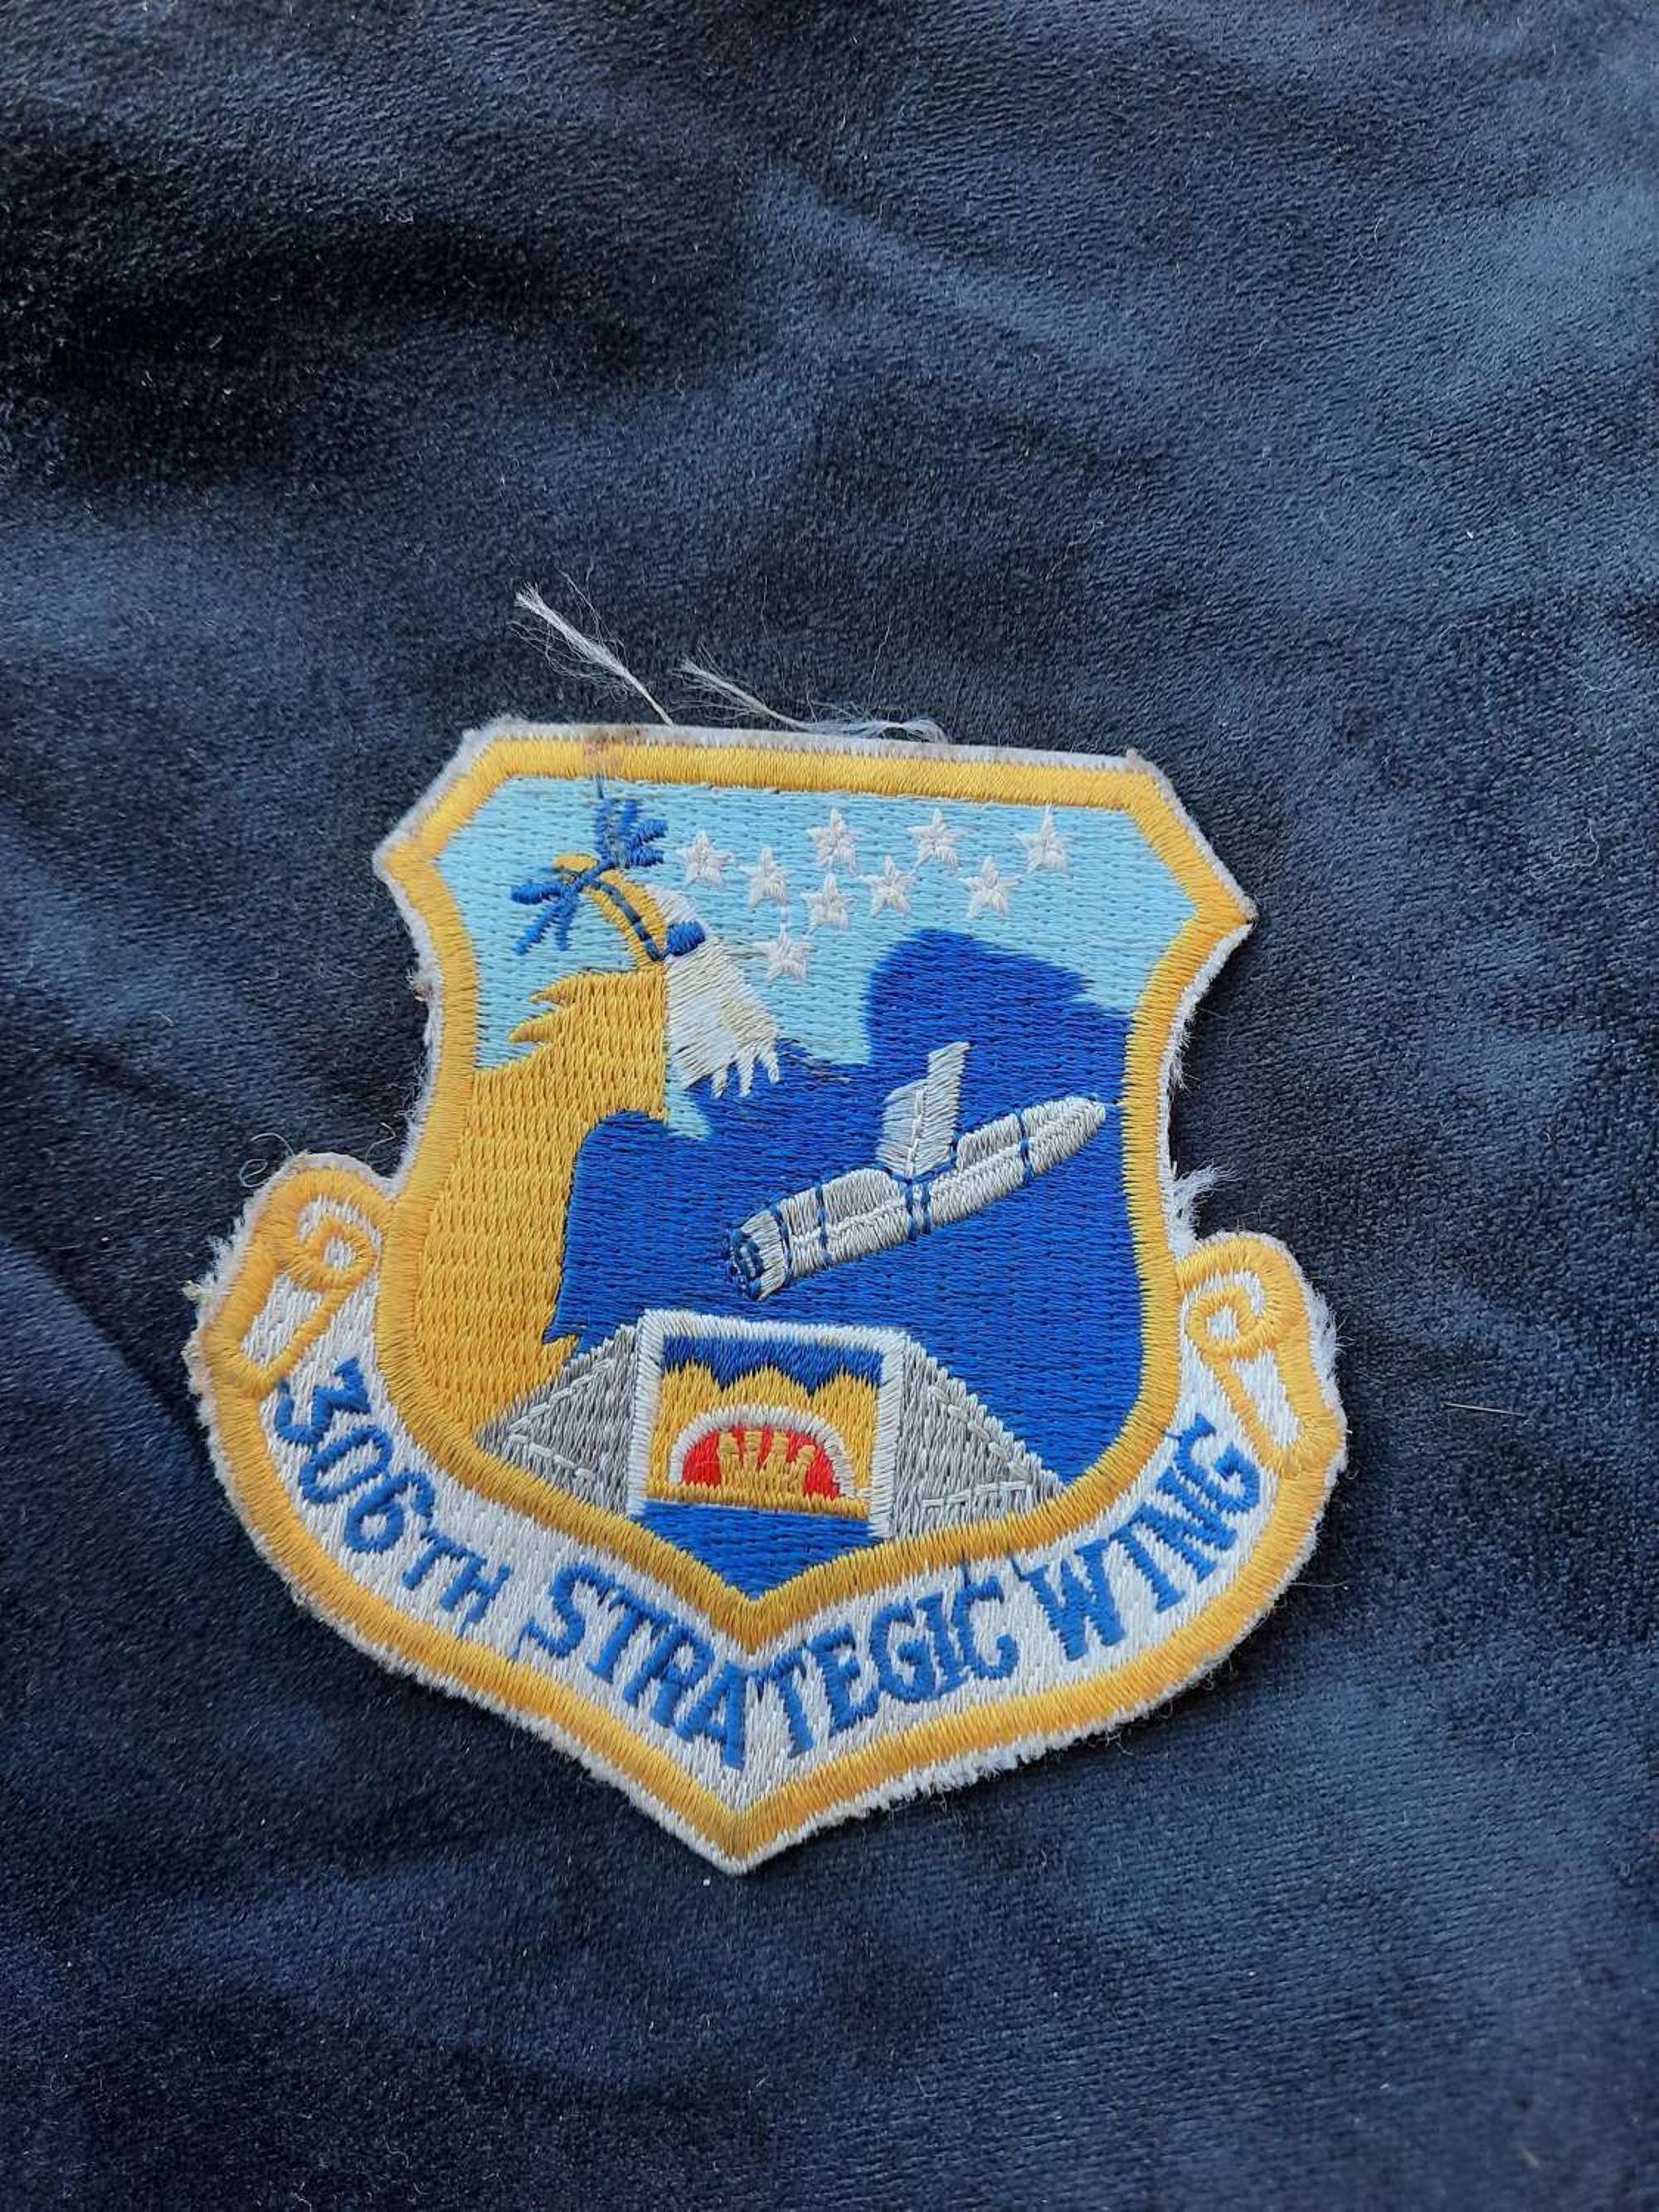 USAF 306 Strategic Wing Patch